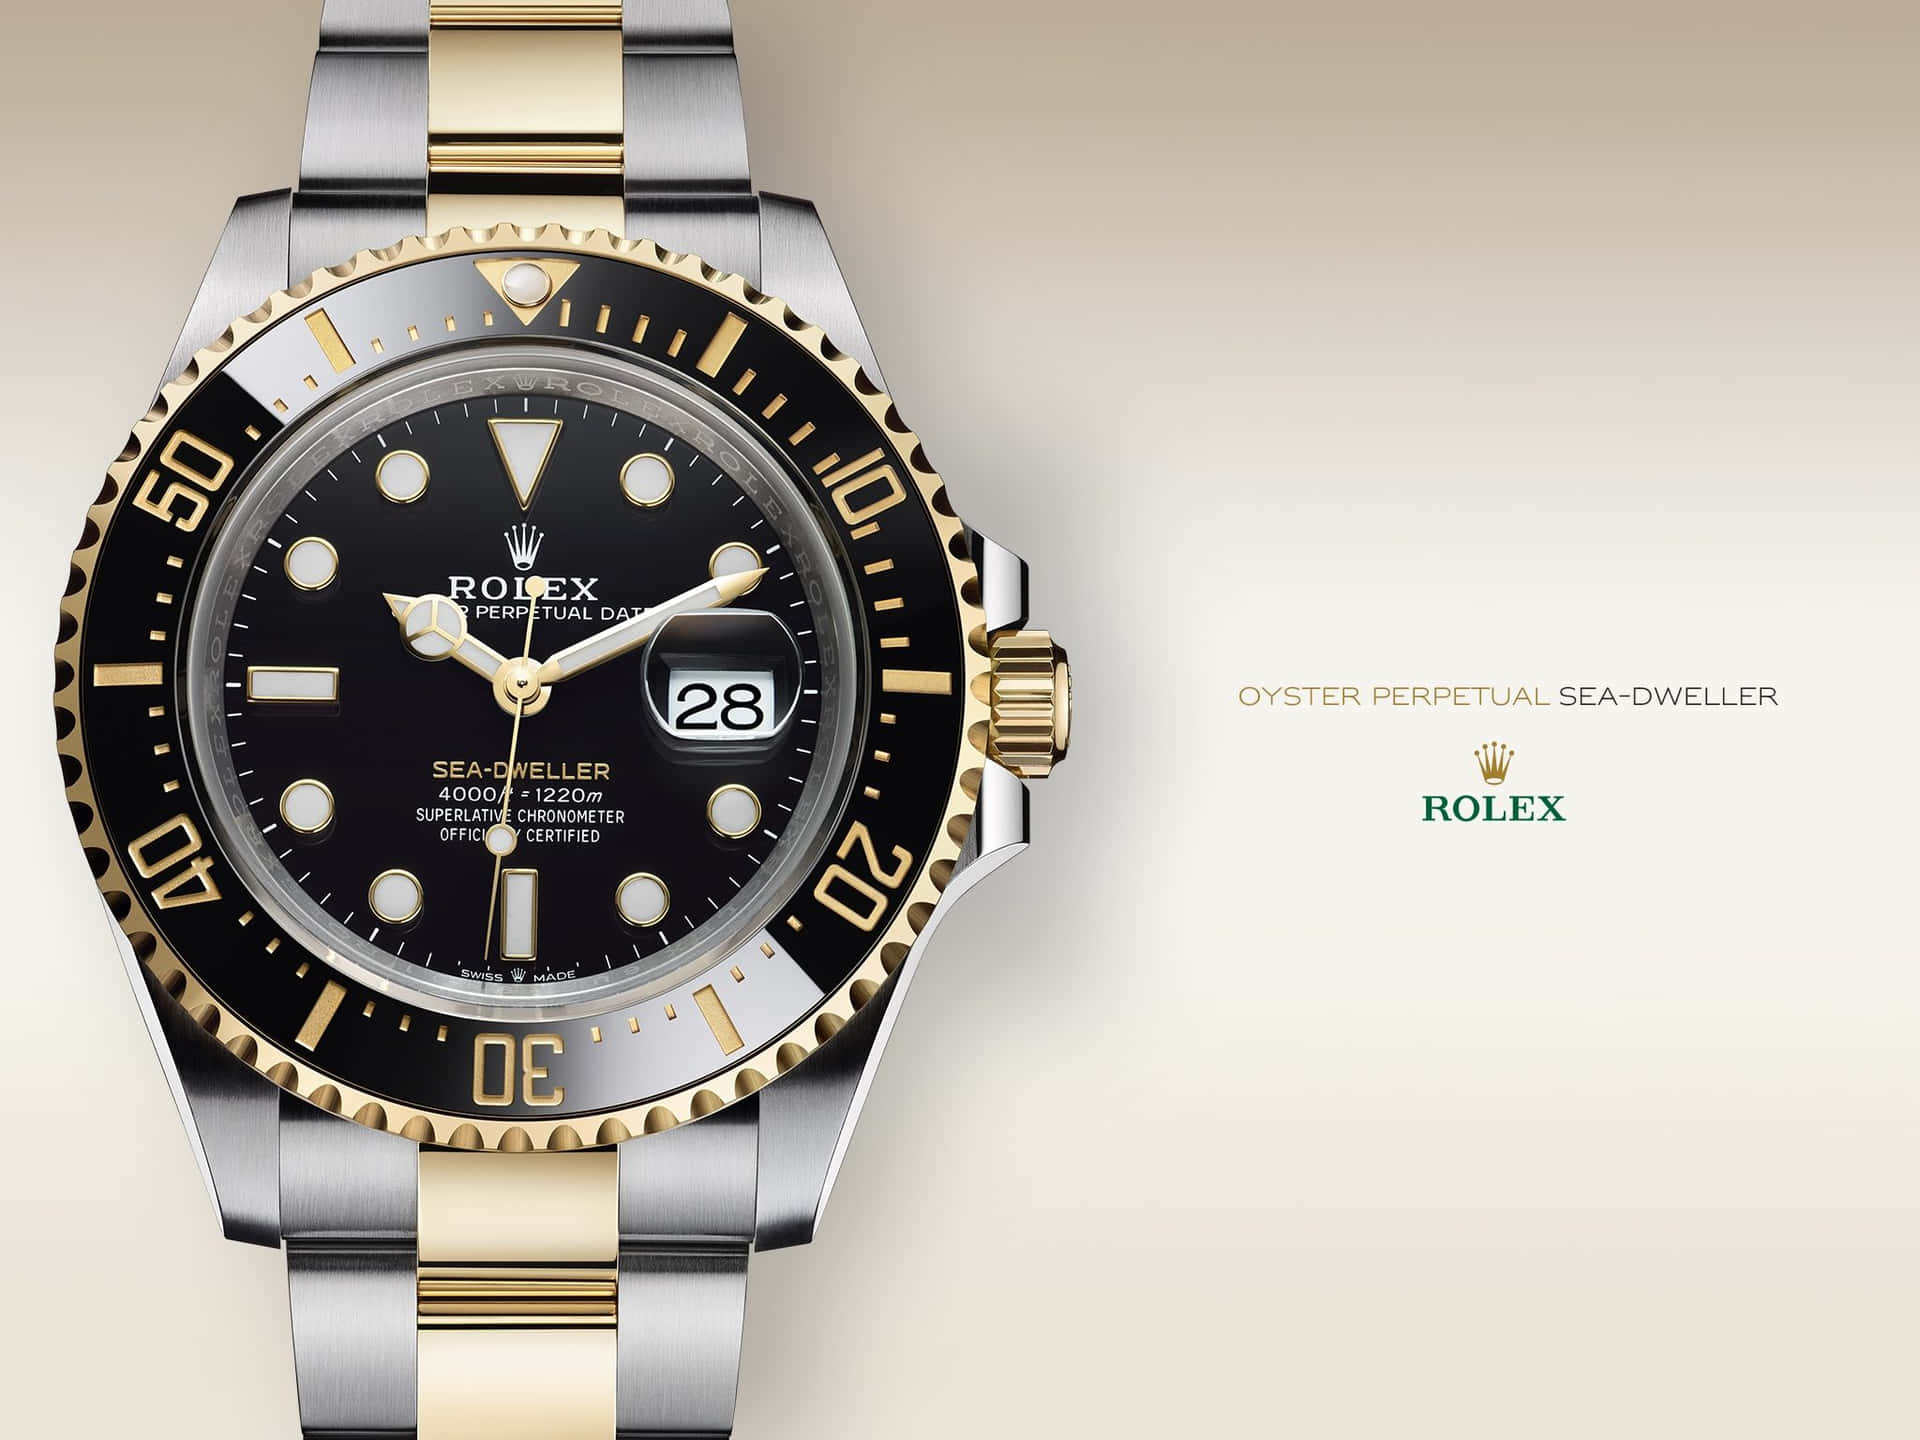 Classic Rolex Timepiece Showcasing Elegance and Luxury